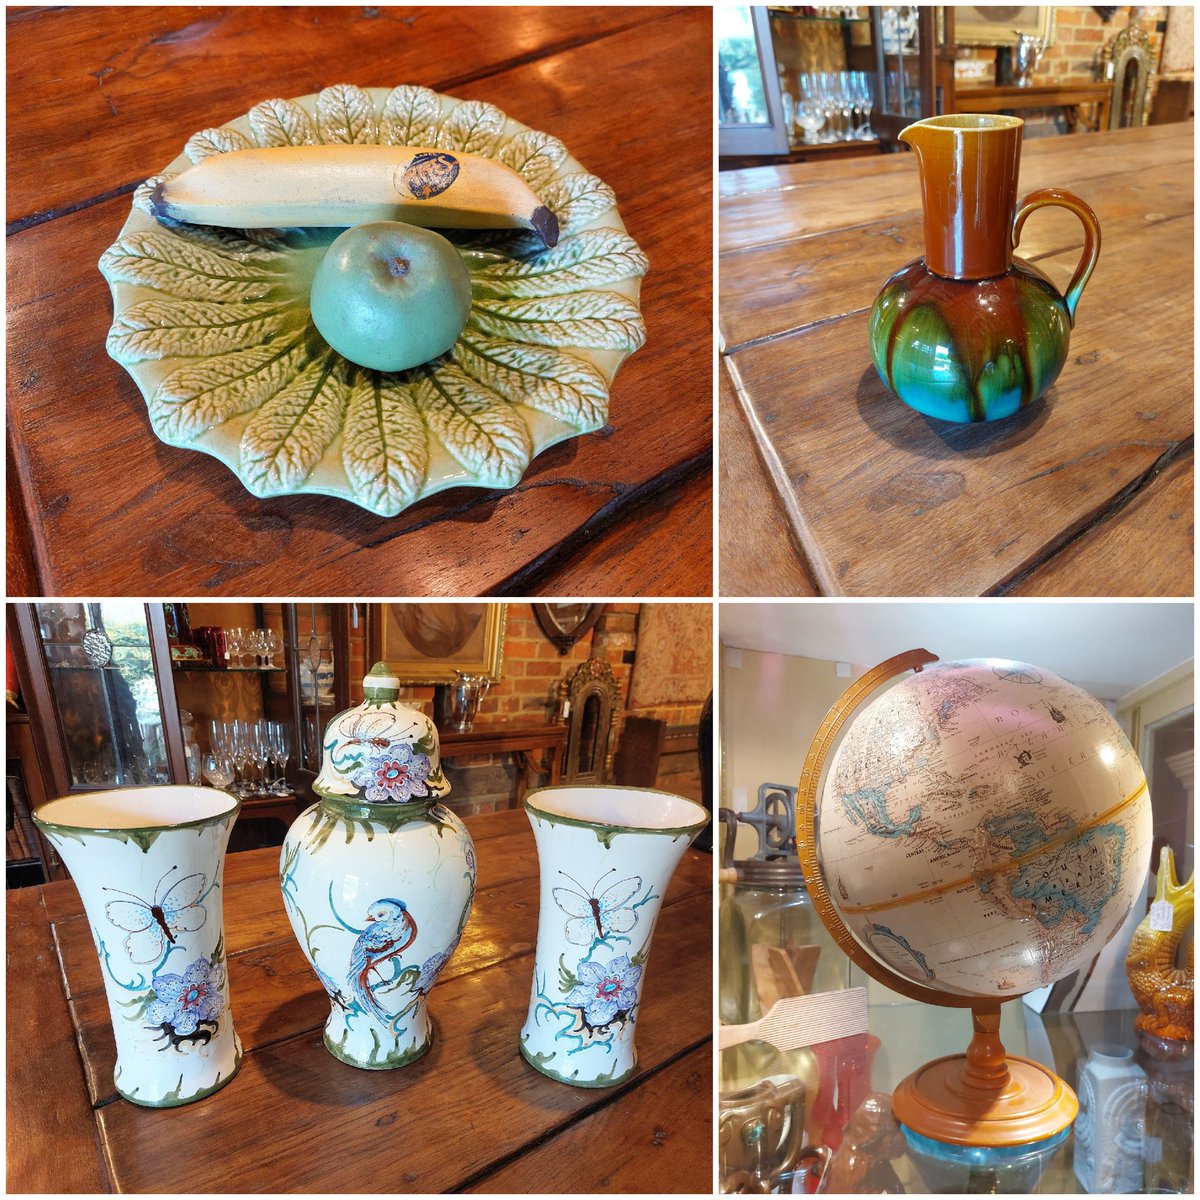 #bretbyfruitbowl #christopherdresserjug #goudavases #vintageglobe #ceramics #pottery #giftideas #eversleybarnantiques